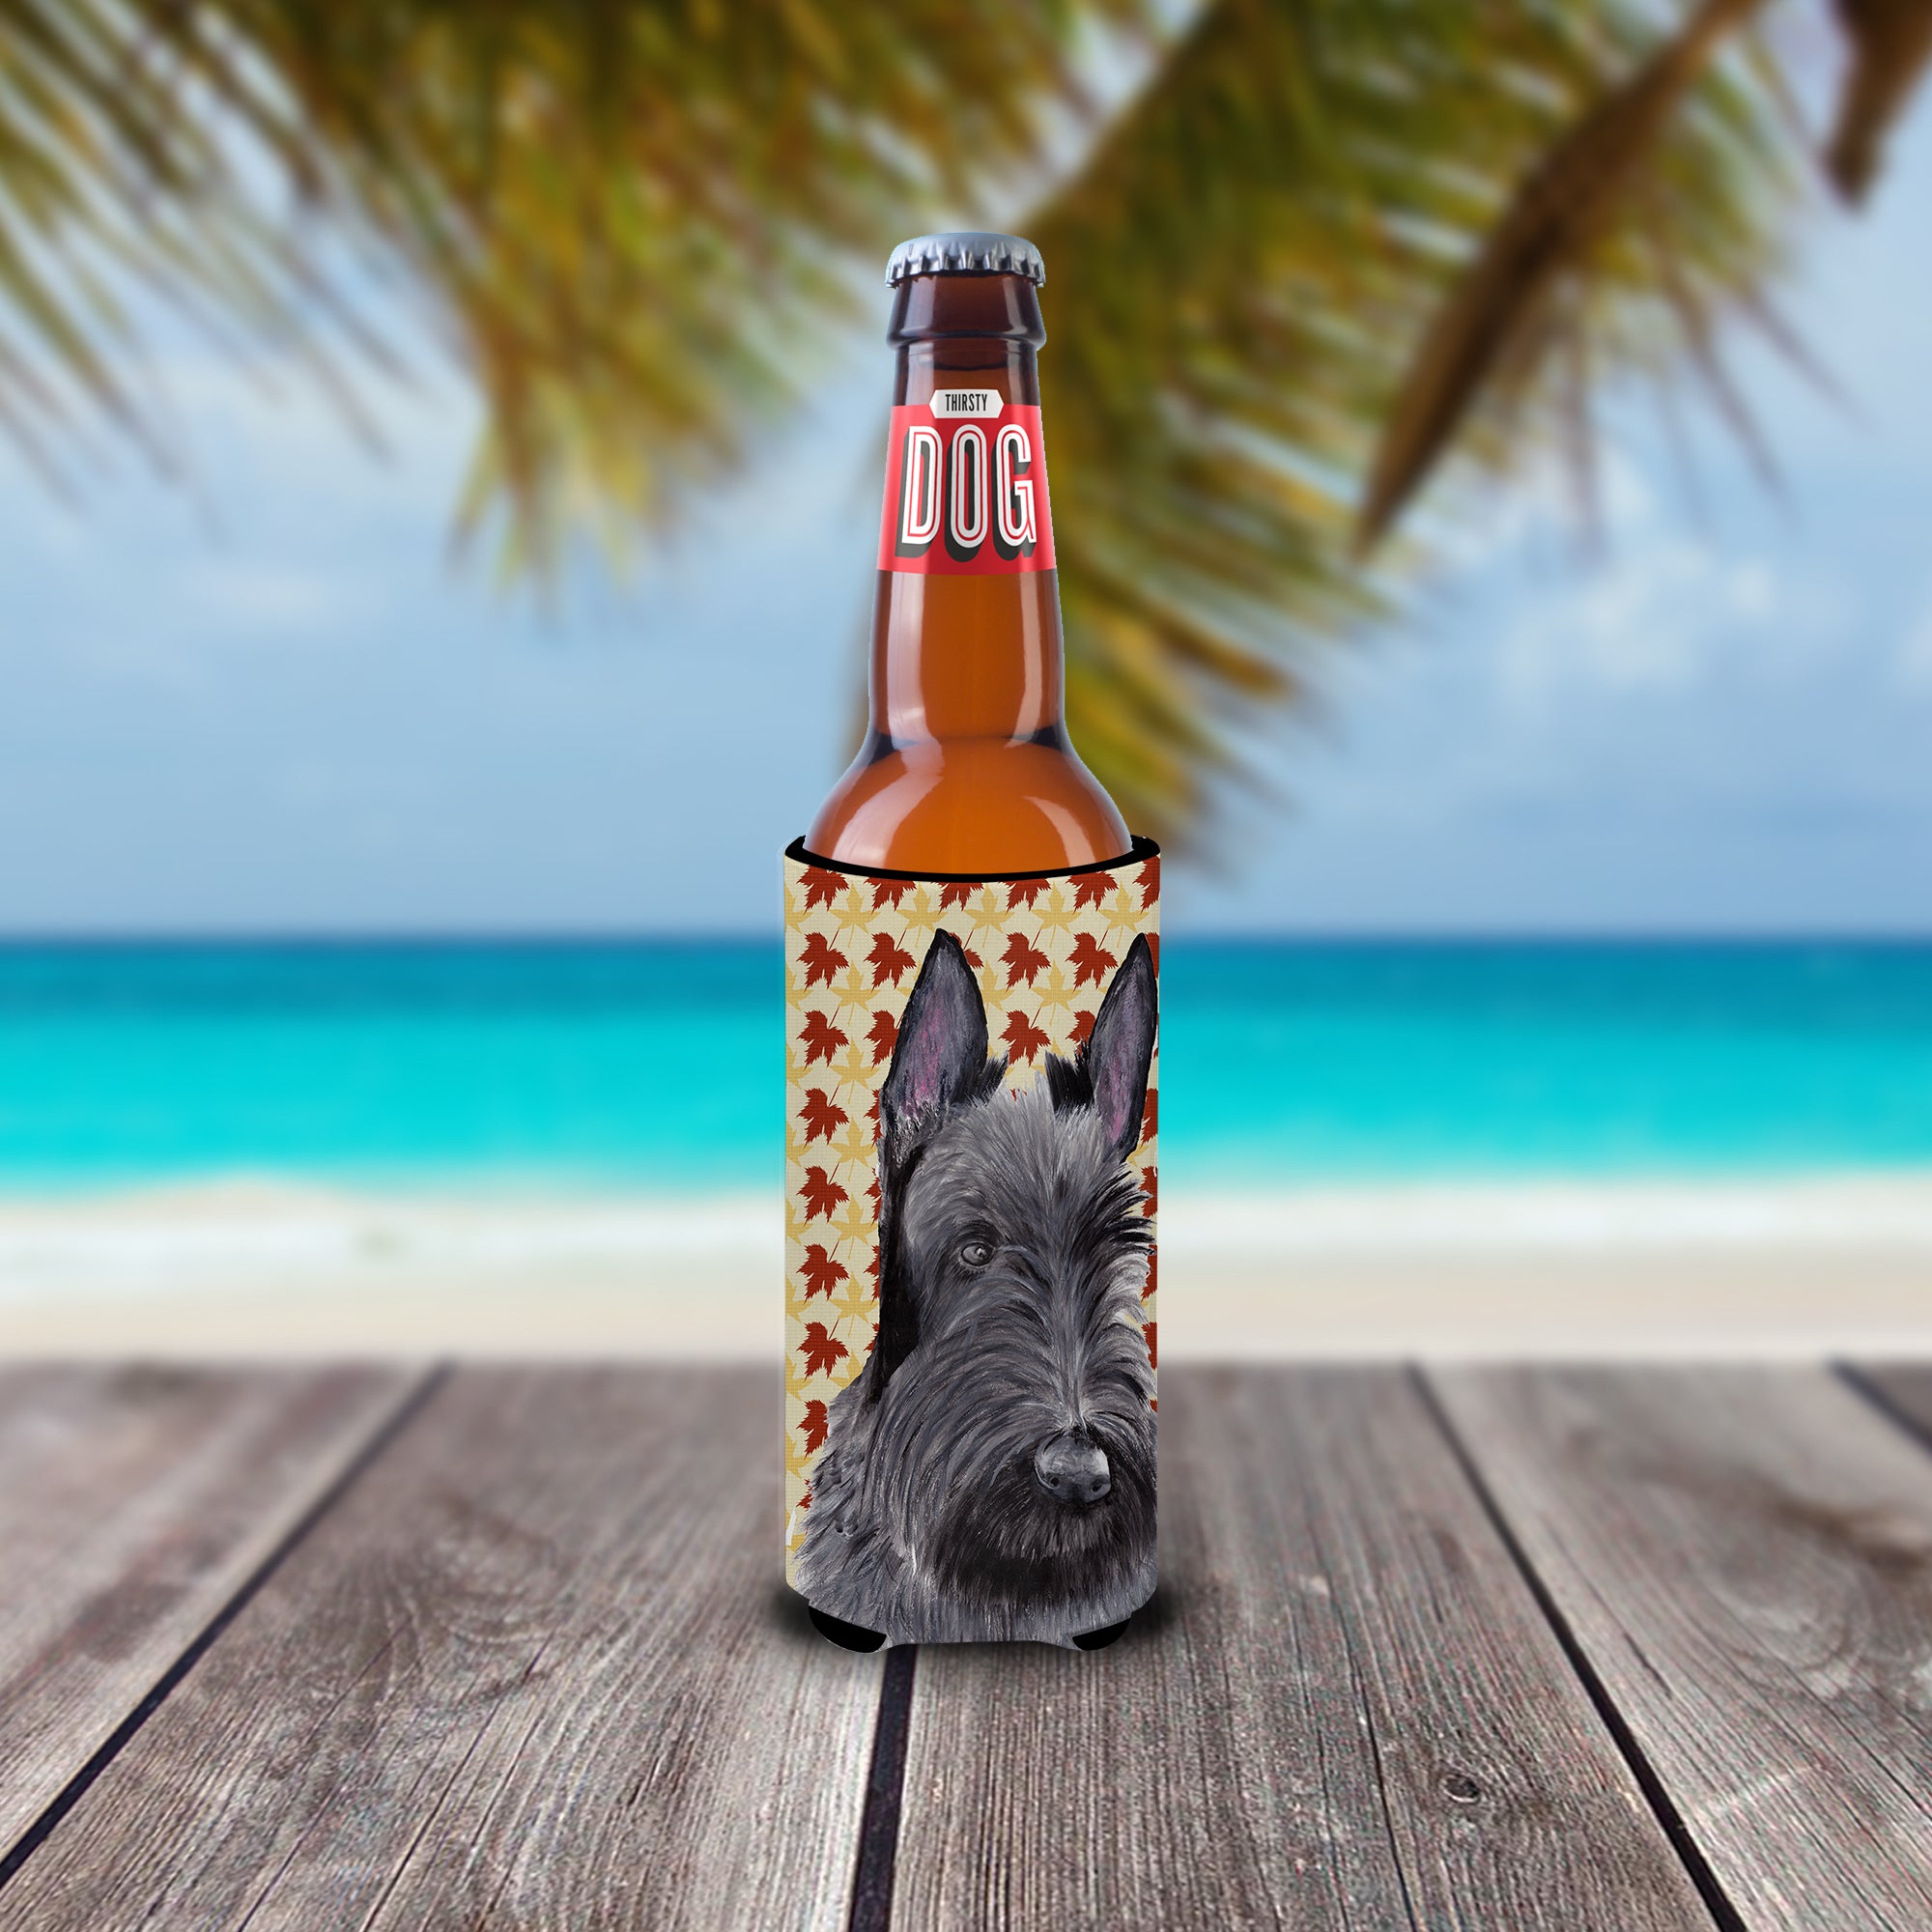 Scottish Terrier Fall Leaves Portrait Ultra Beverage Insulators for slim cans SC9226MUK.